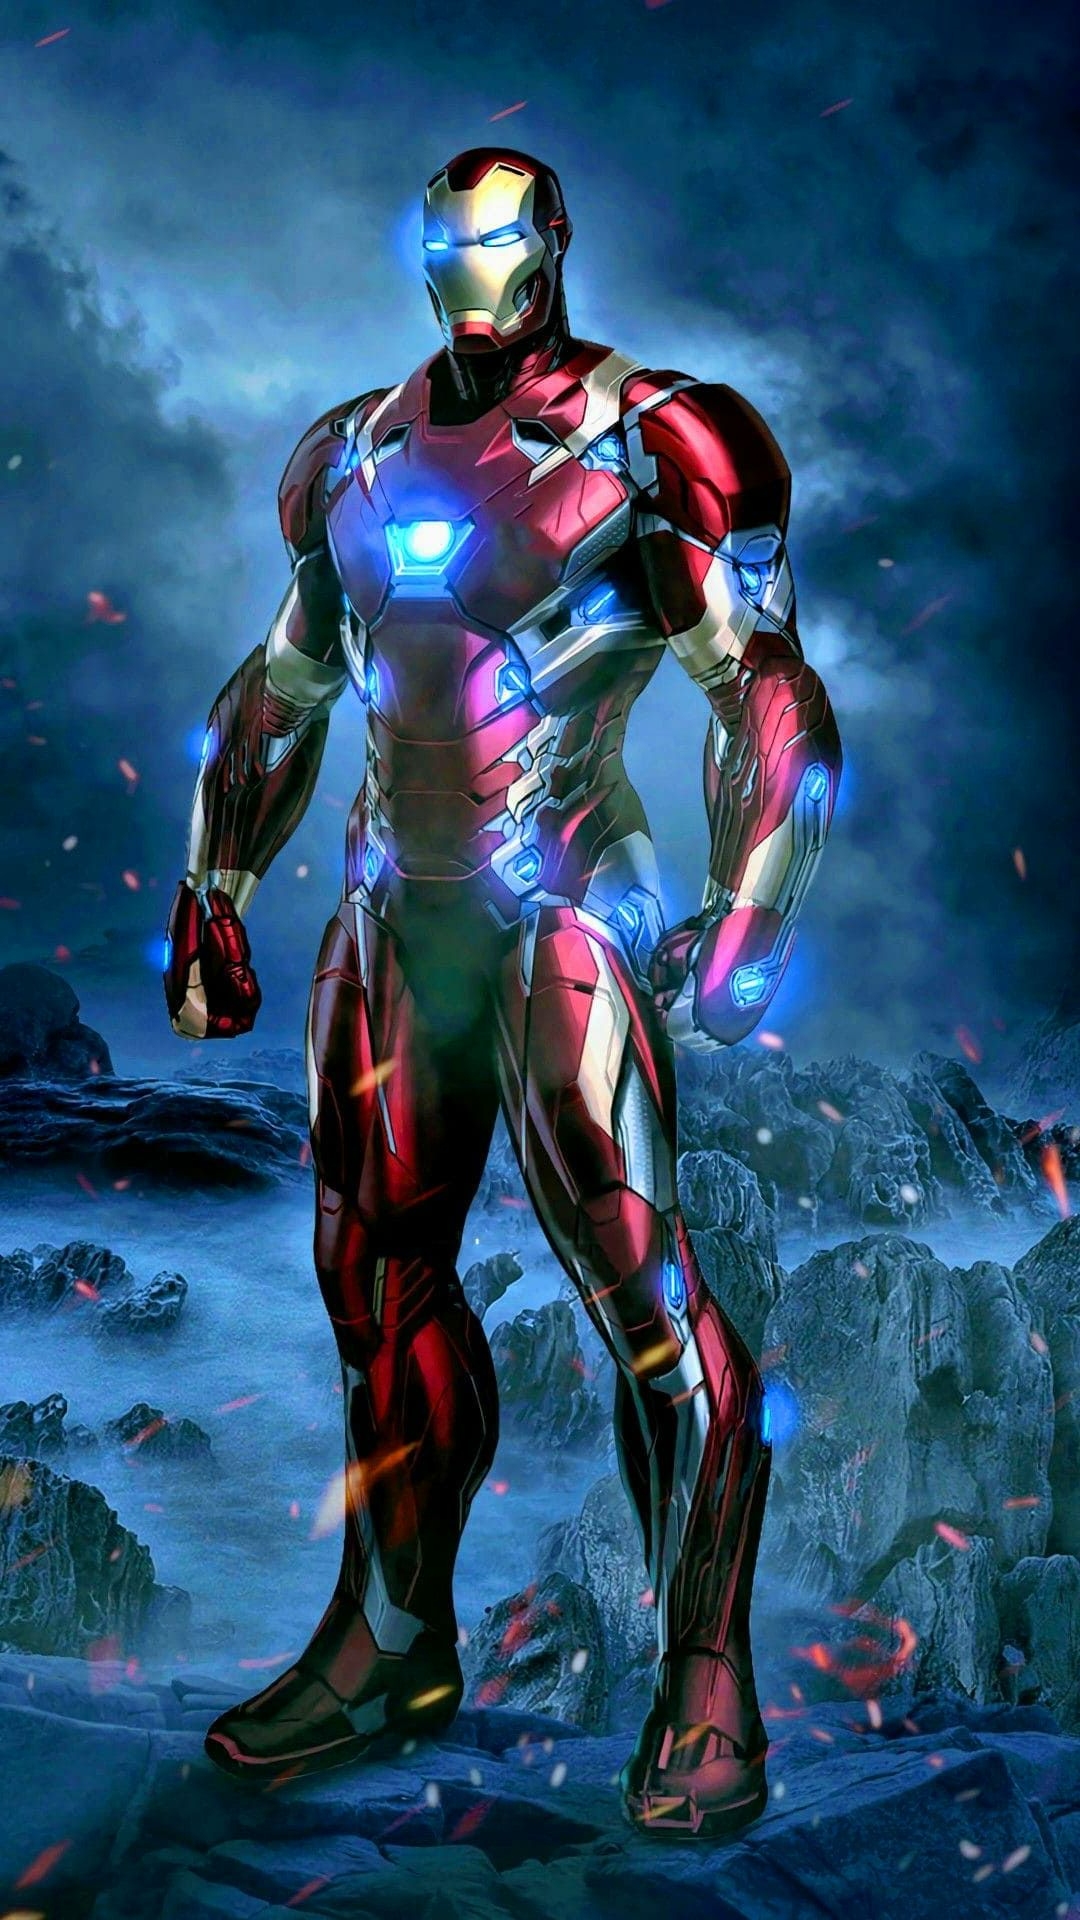 Wallpaper of Iron Man